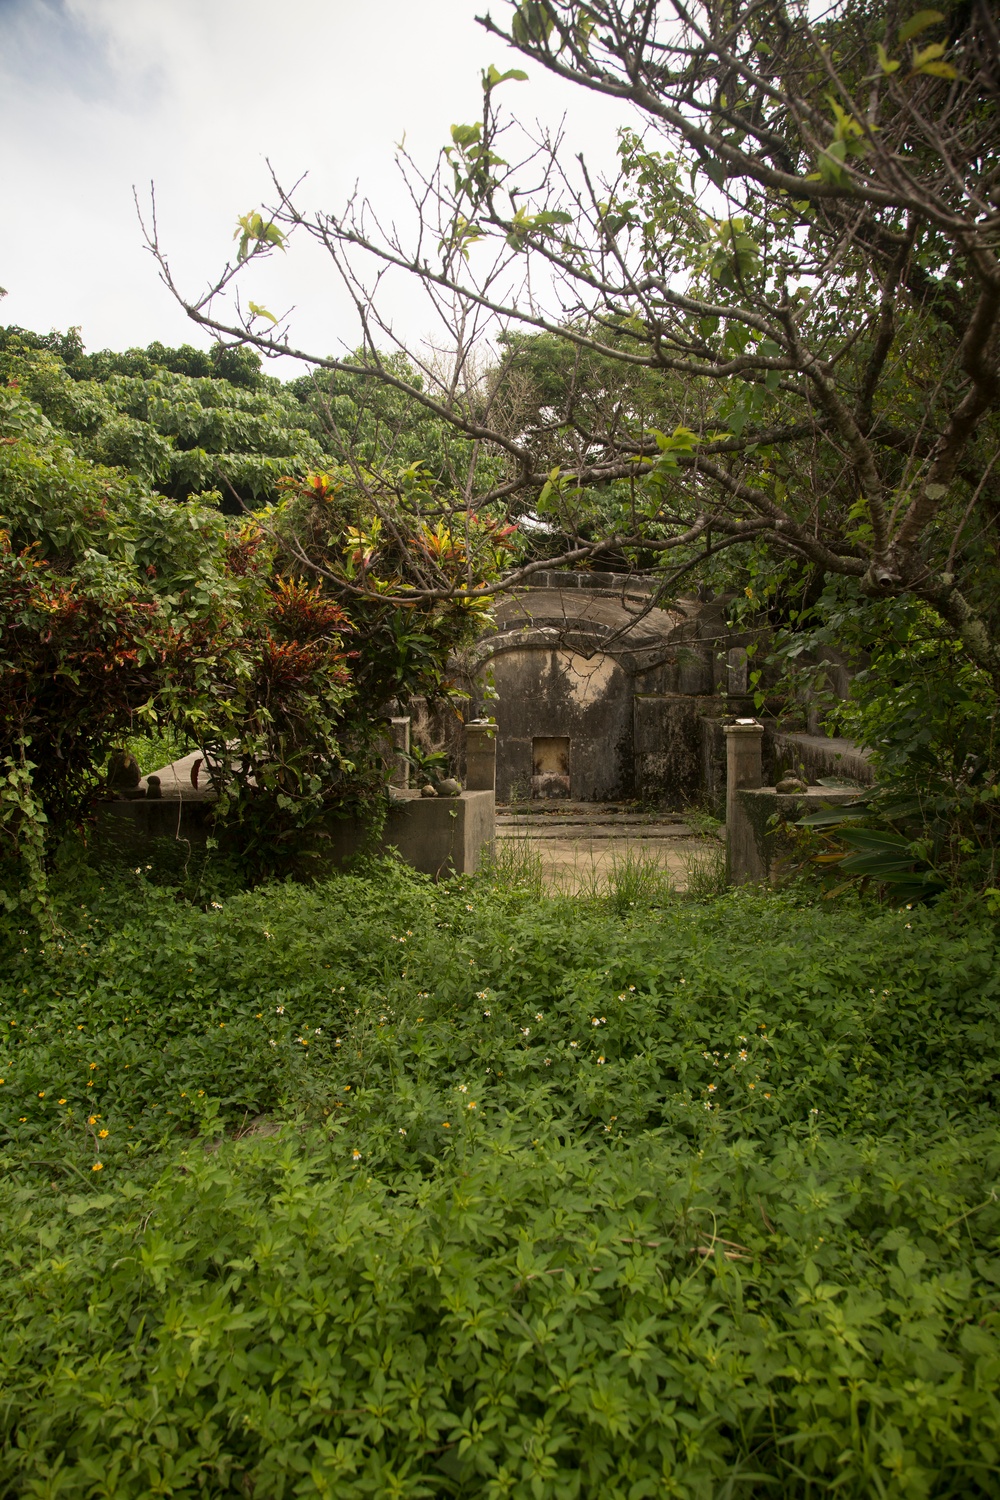 MCIPAC Okinawa Cultural sites on base: Dos and Don’ts